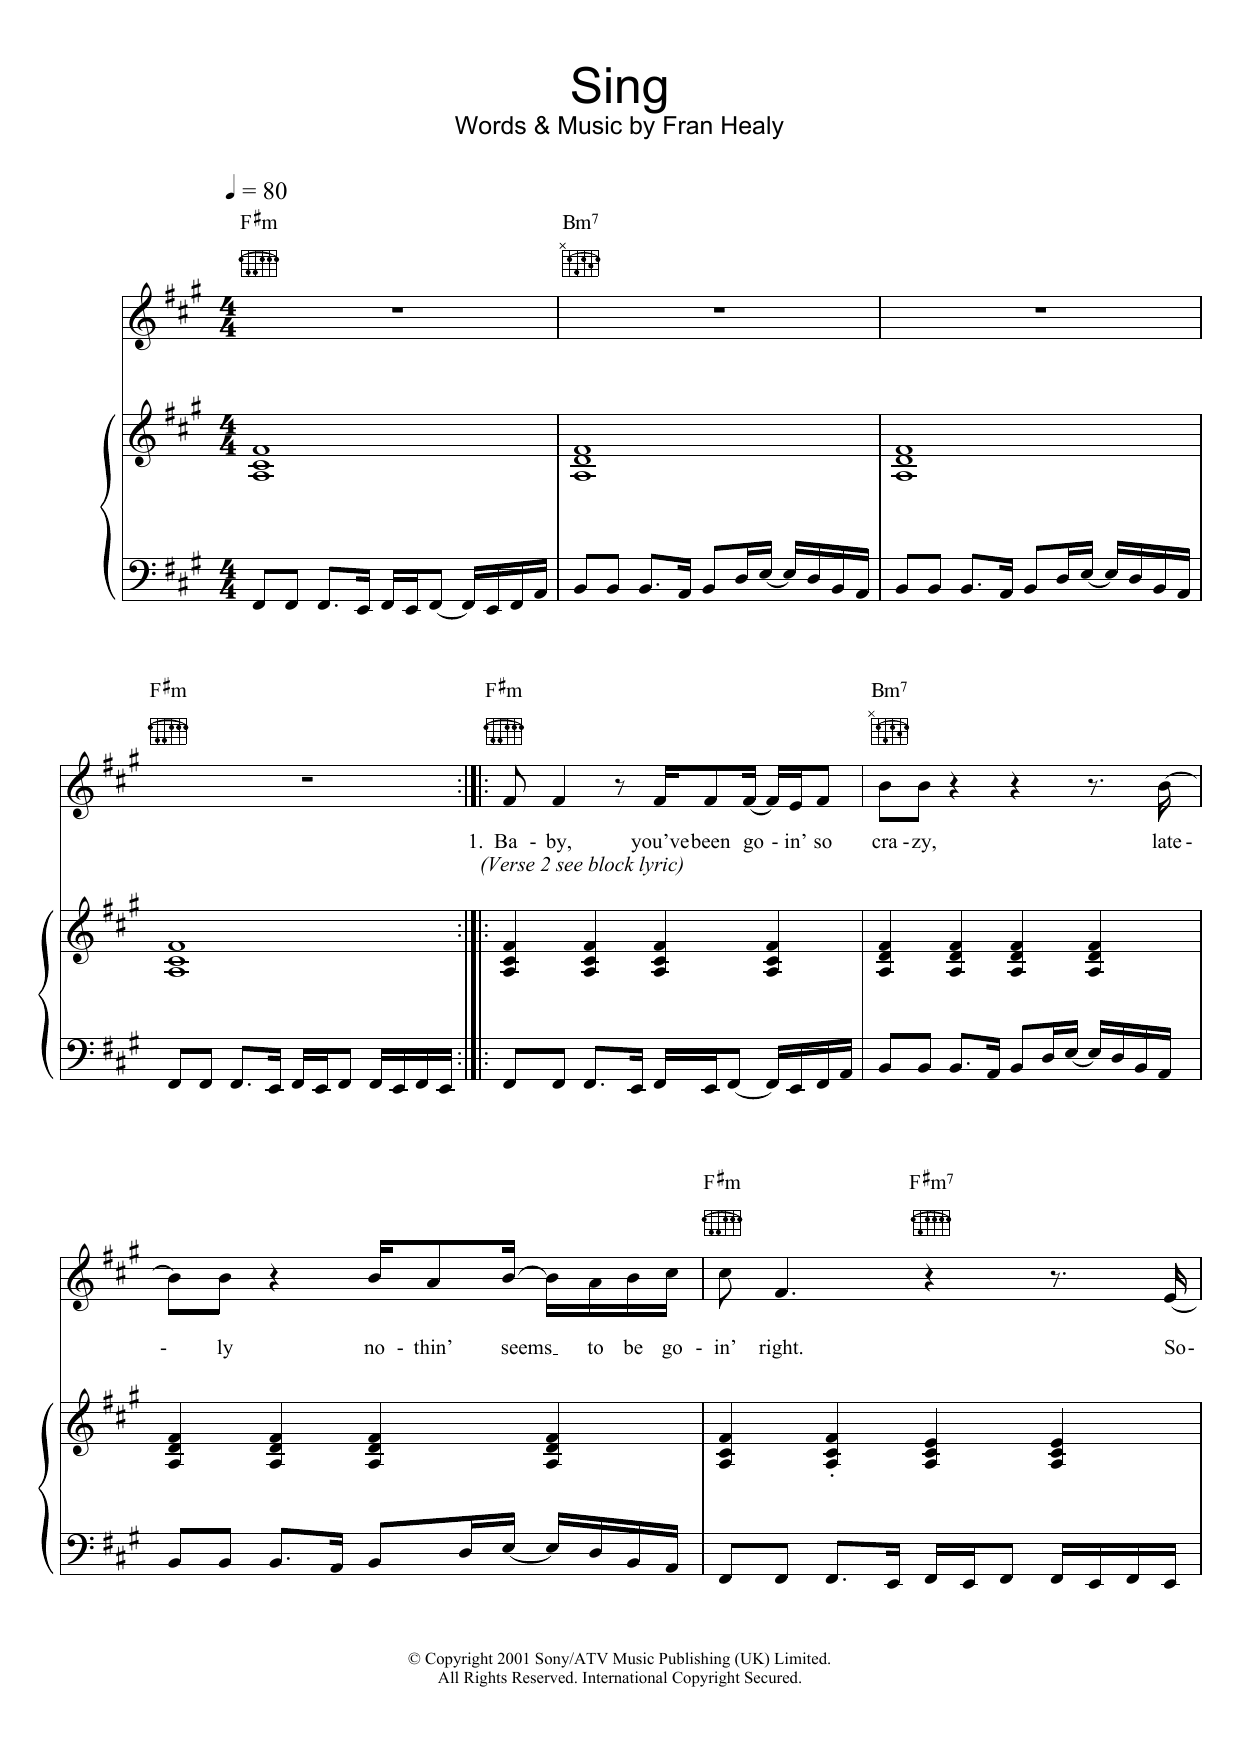 Travis Sing Sheet Music Notes & Chords for Clarinet - Download or Print PDF